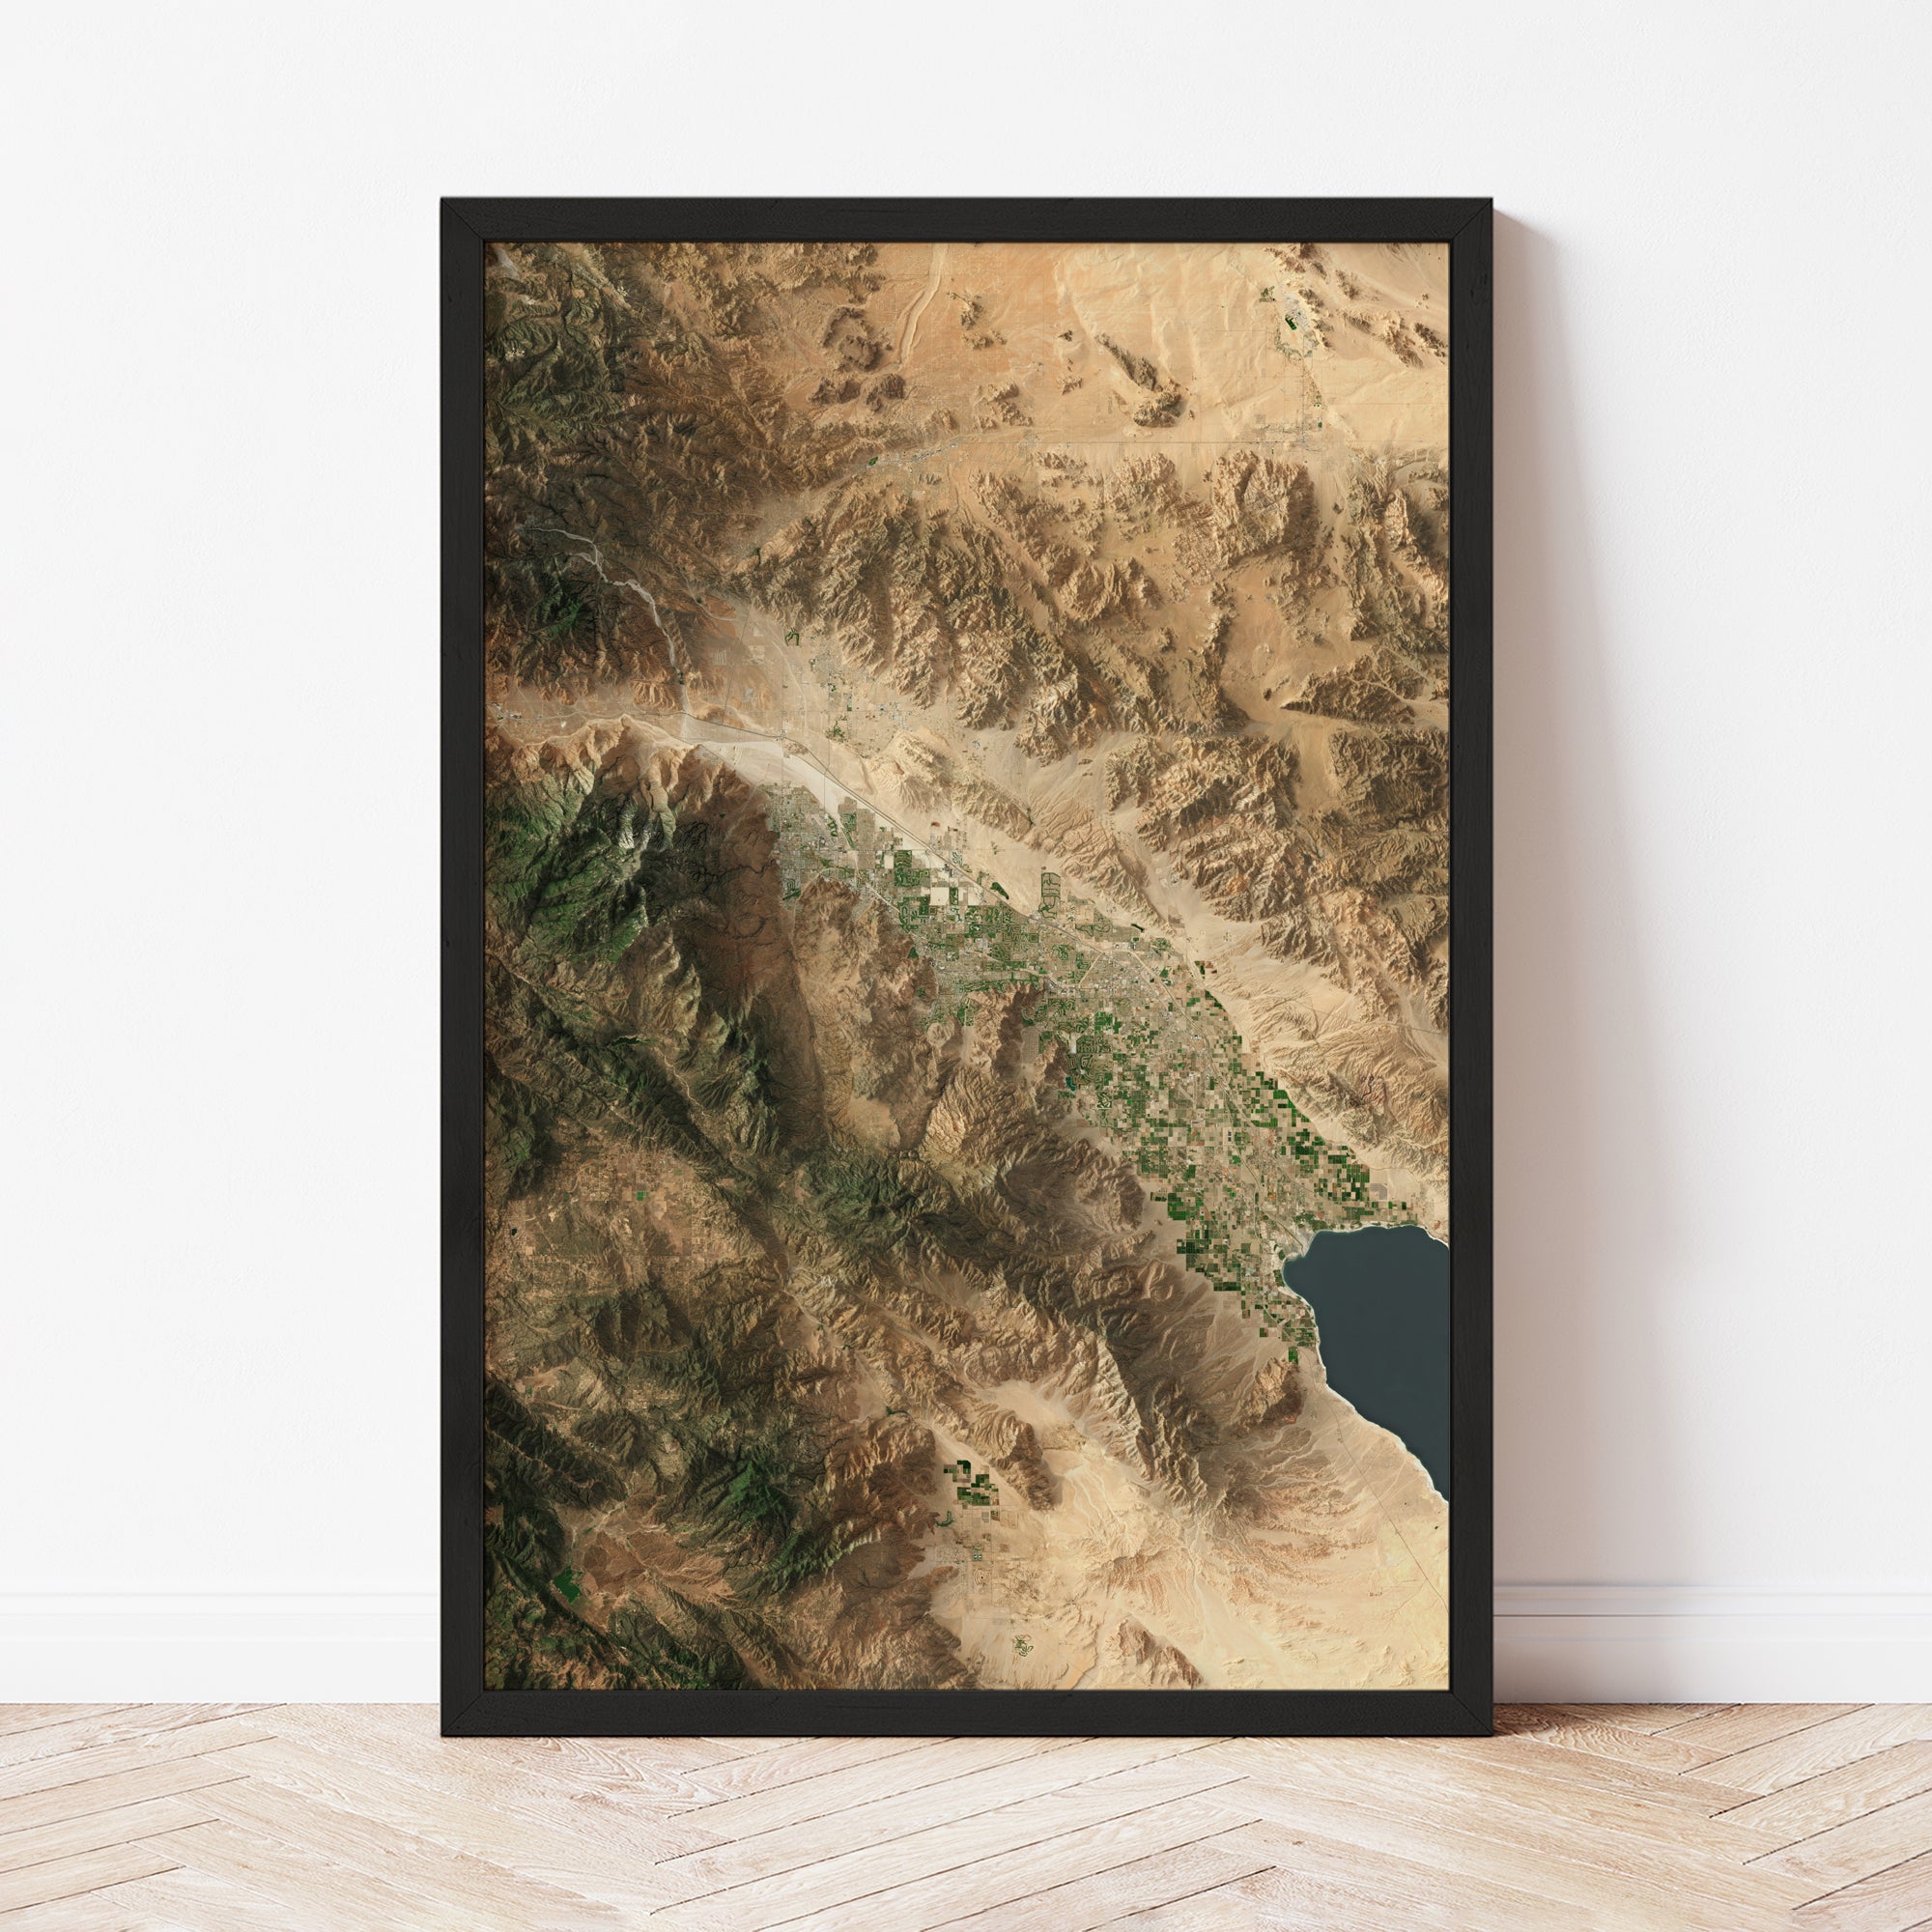 Coachella Valley - Satellite Imagery